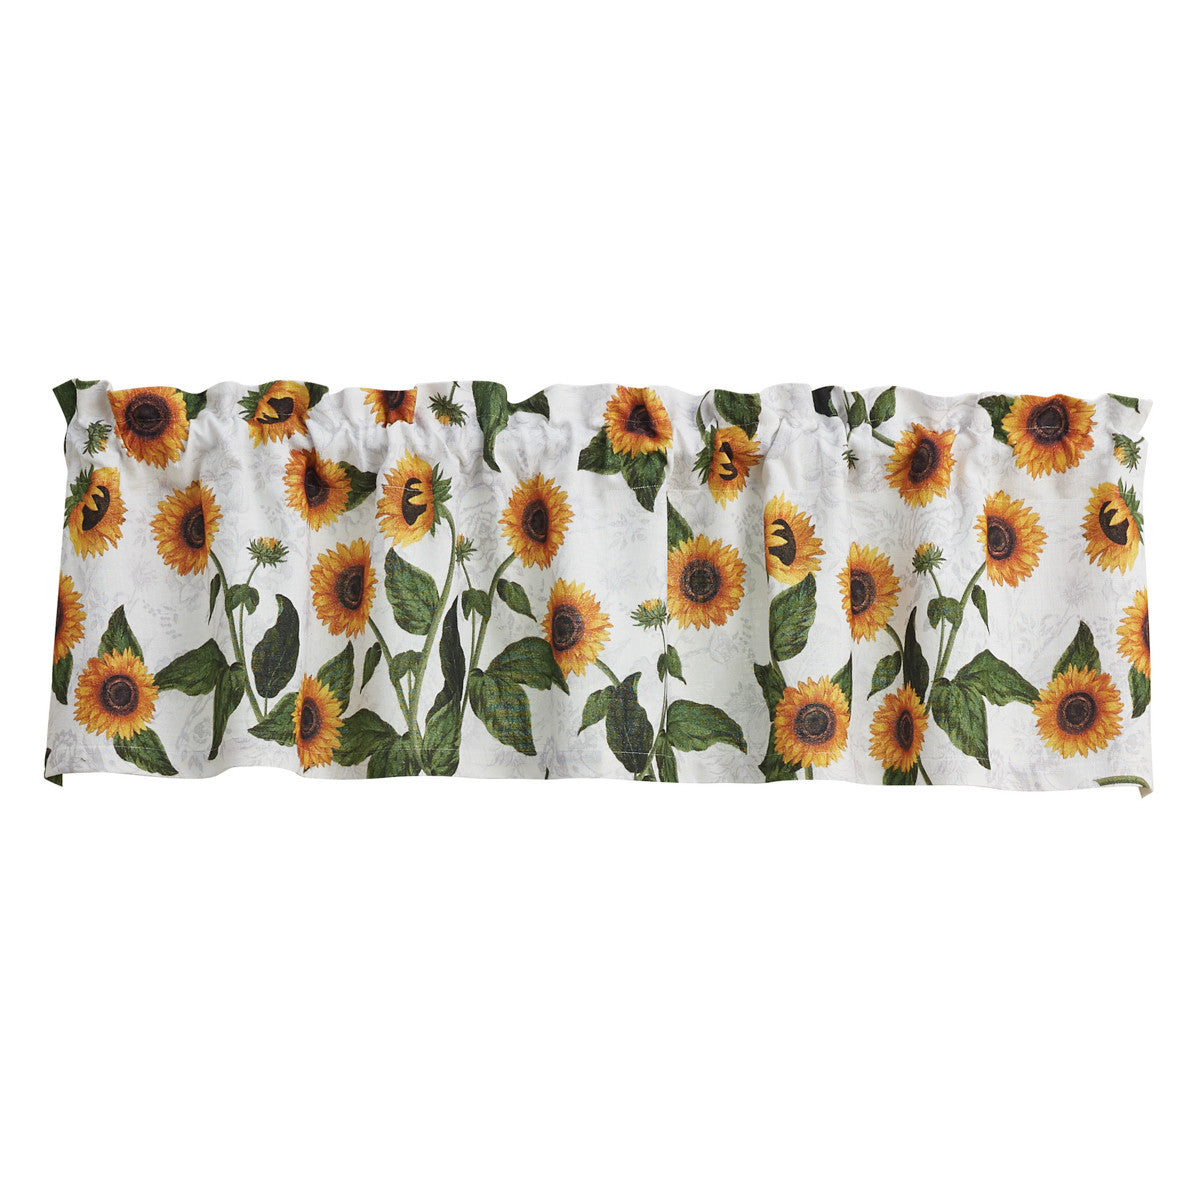 Sunflower Toile Valance - 60x14 Park designs